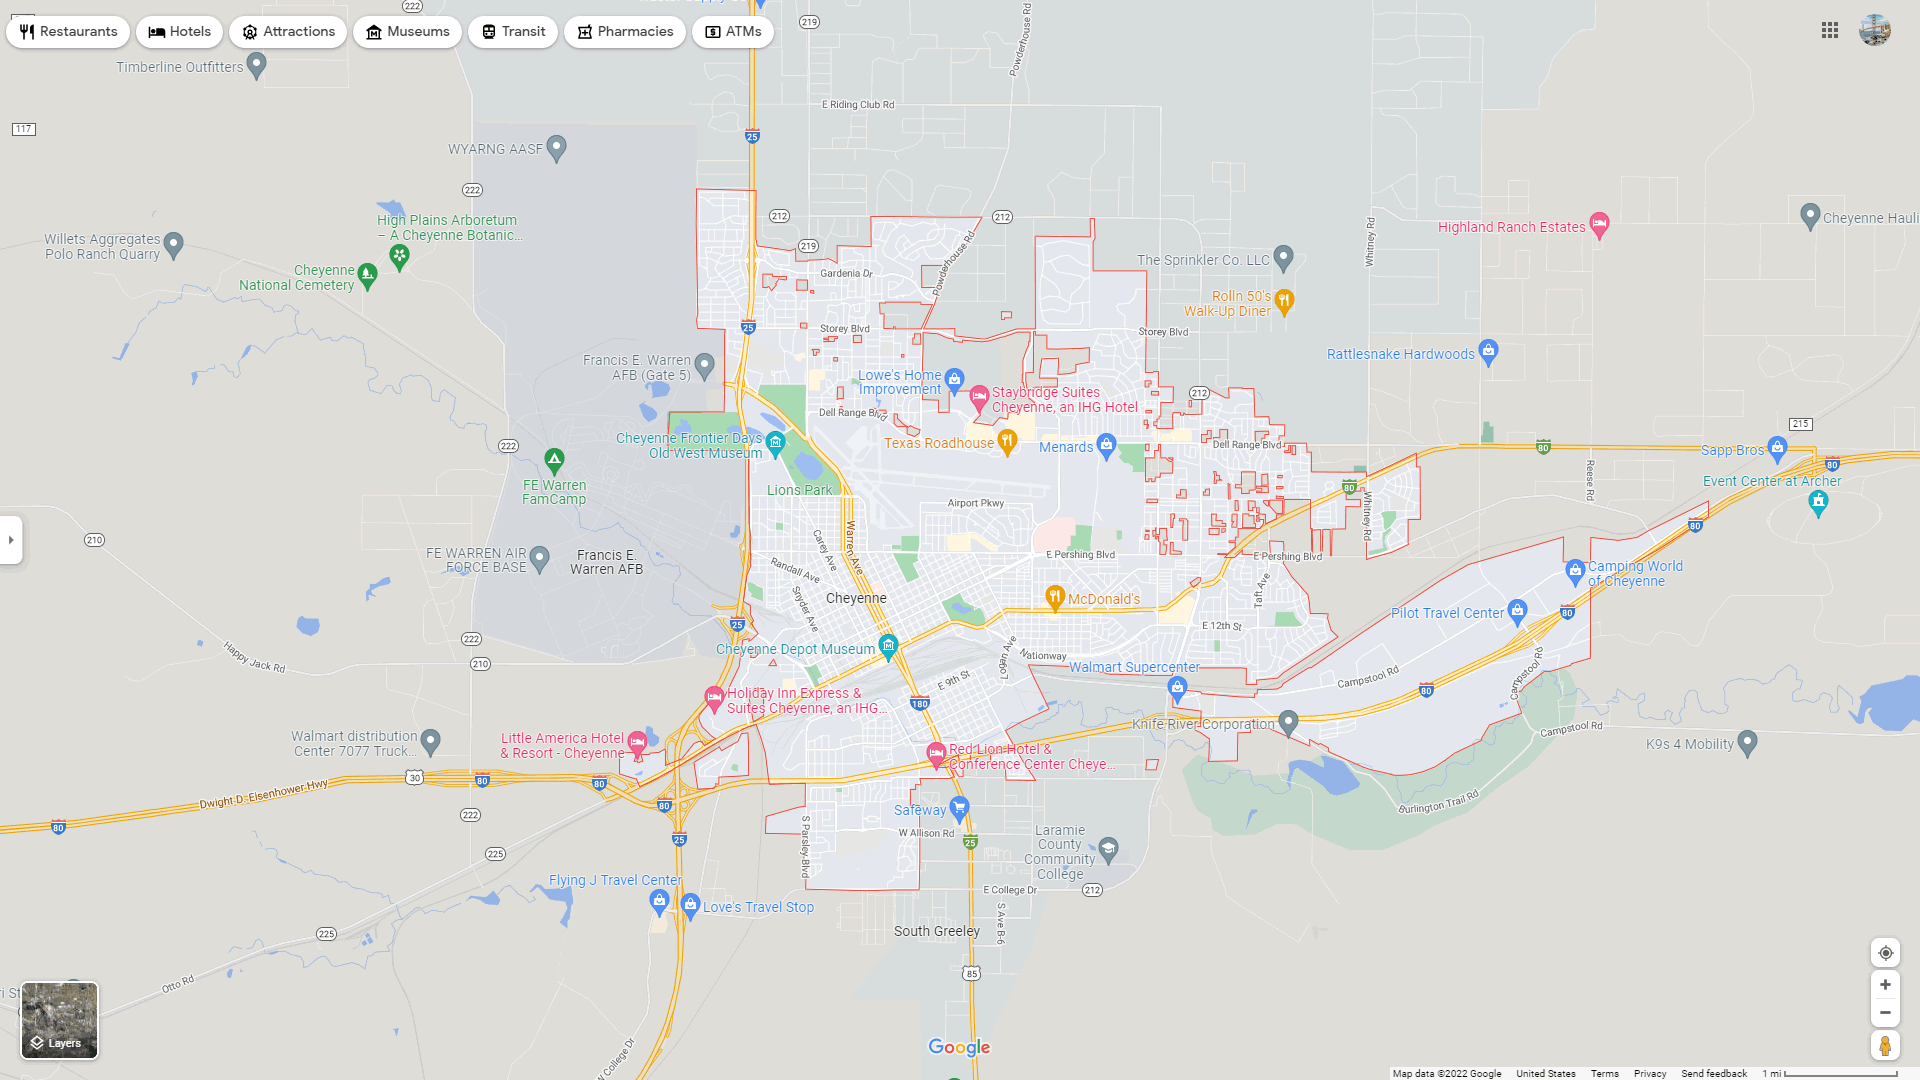 Cheyenne map